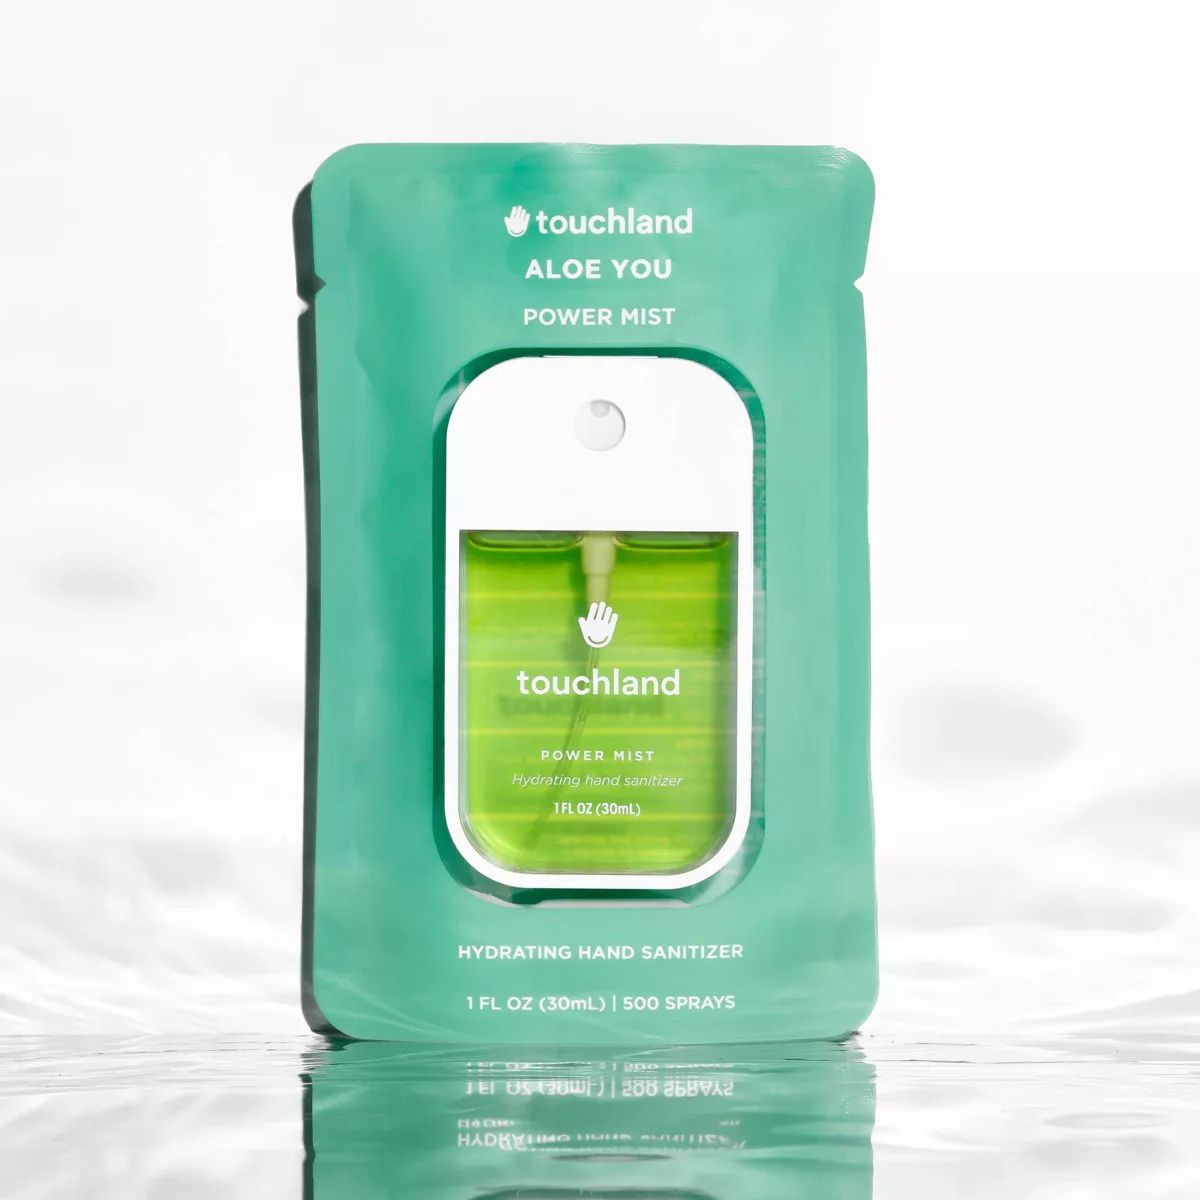 Touchland Power Mist Hydrating Hand Sanitizer - Aloe You  - 1 fl oz/500 sprays | Target